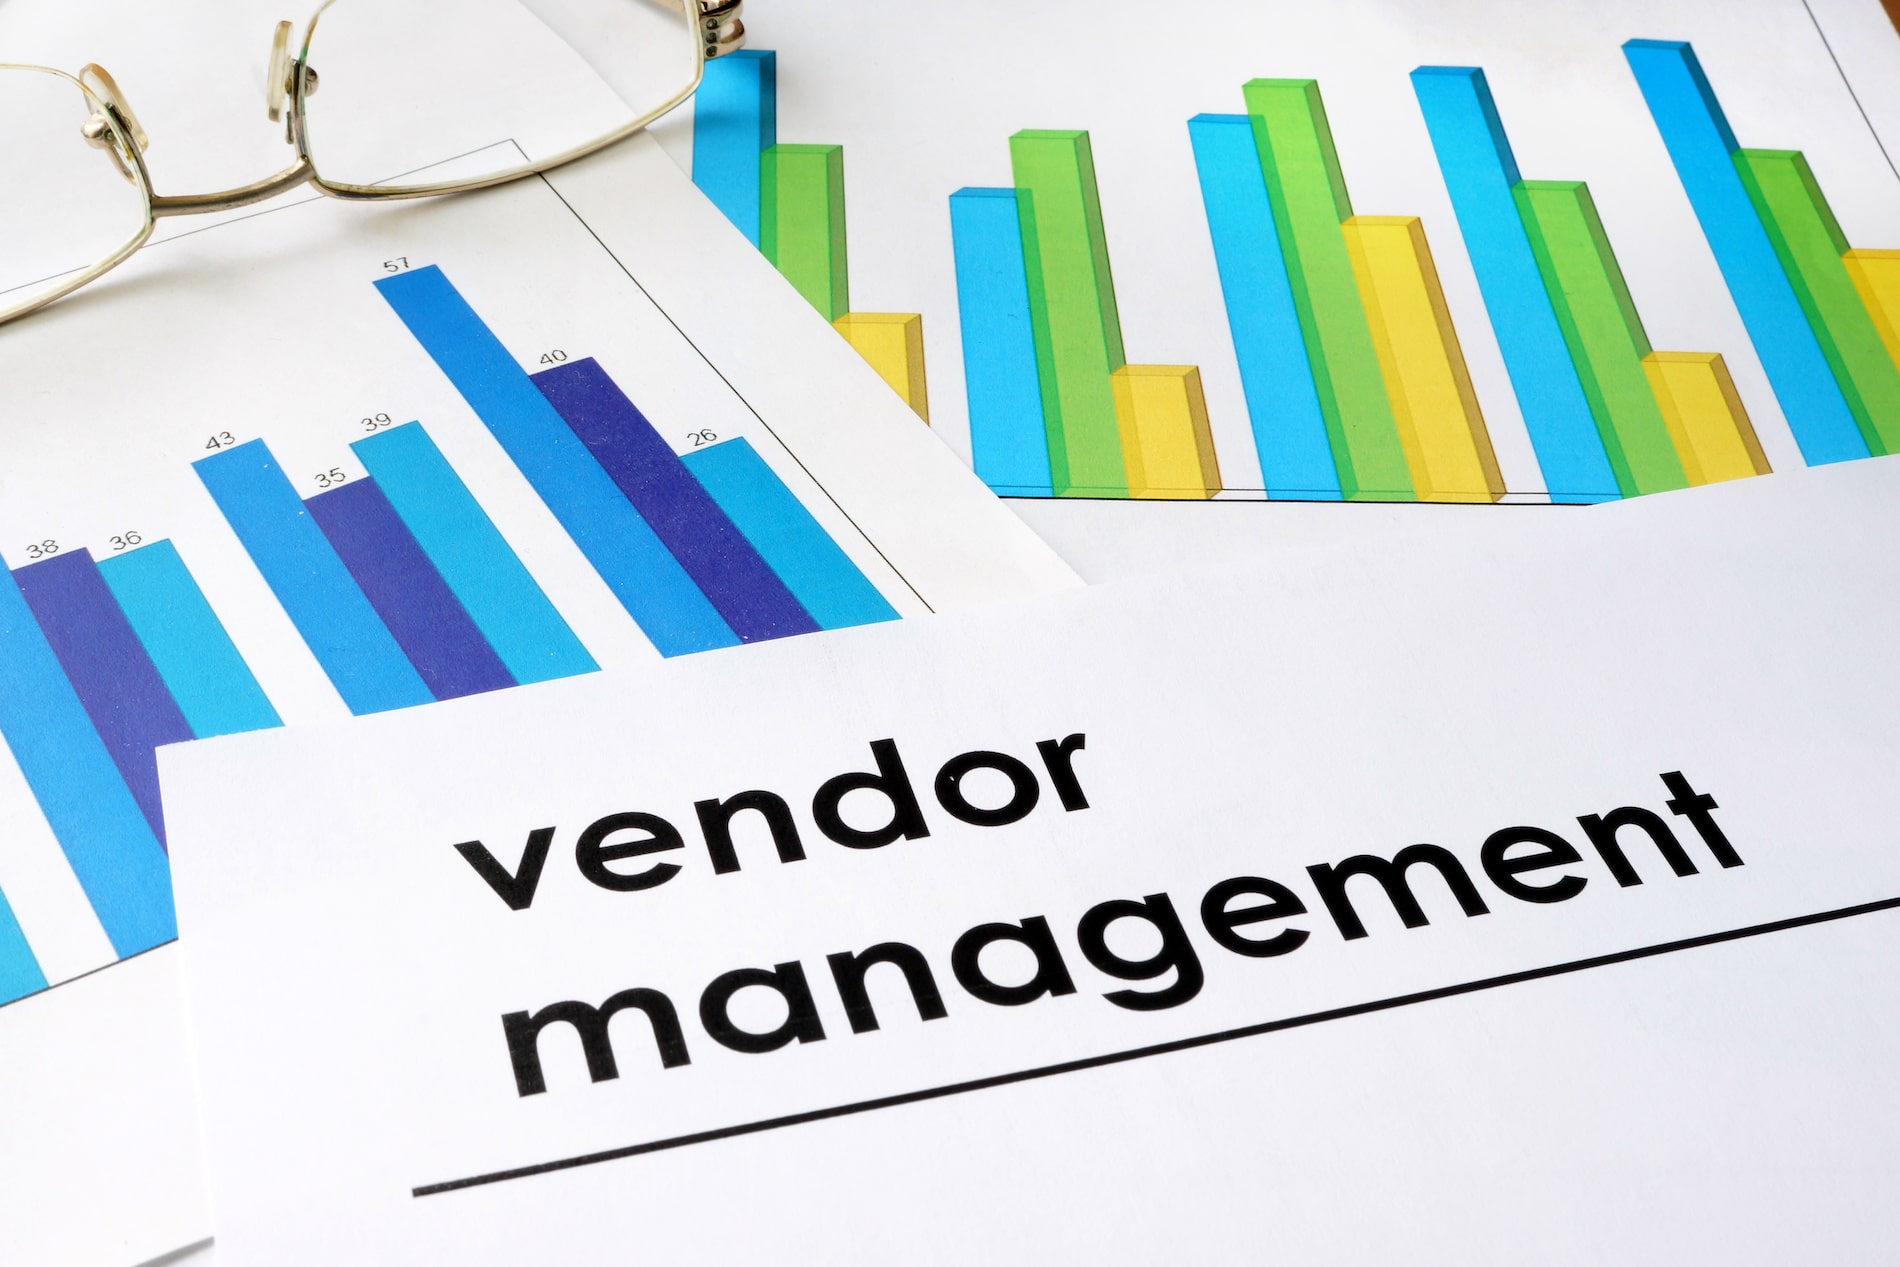 adobestock vendor management